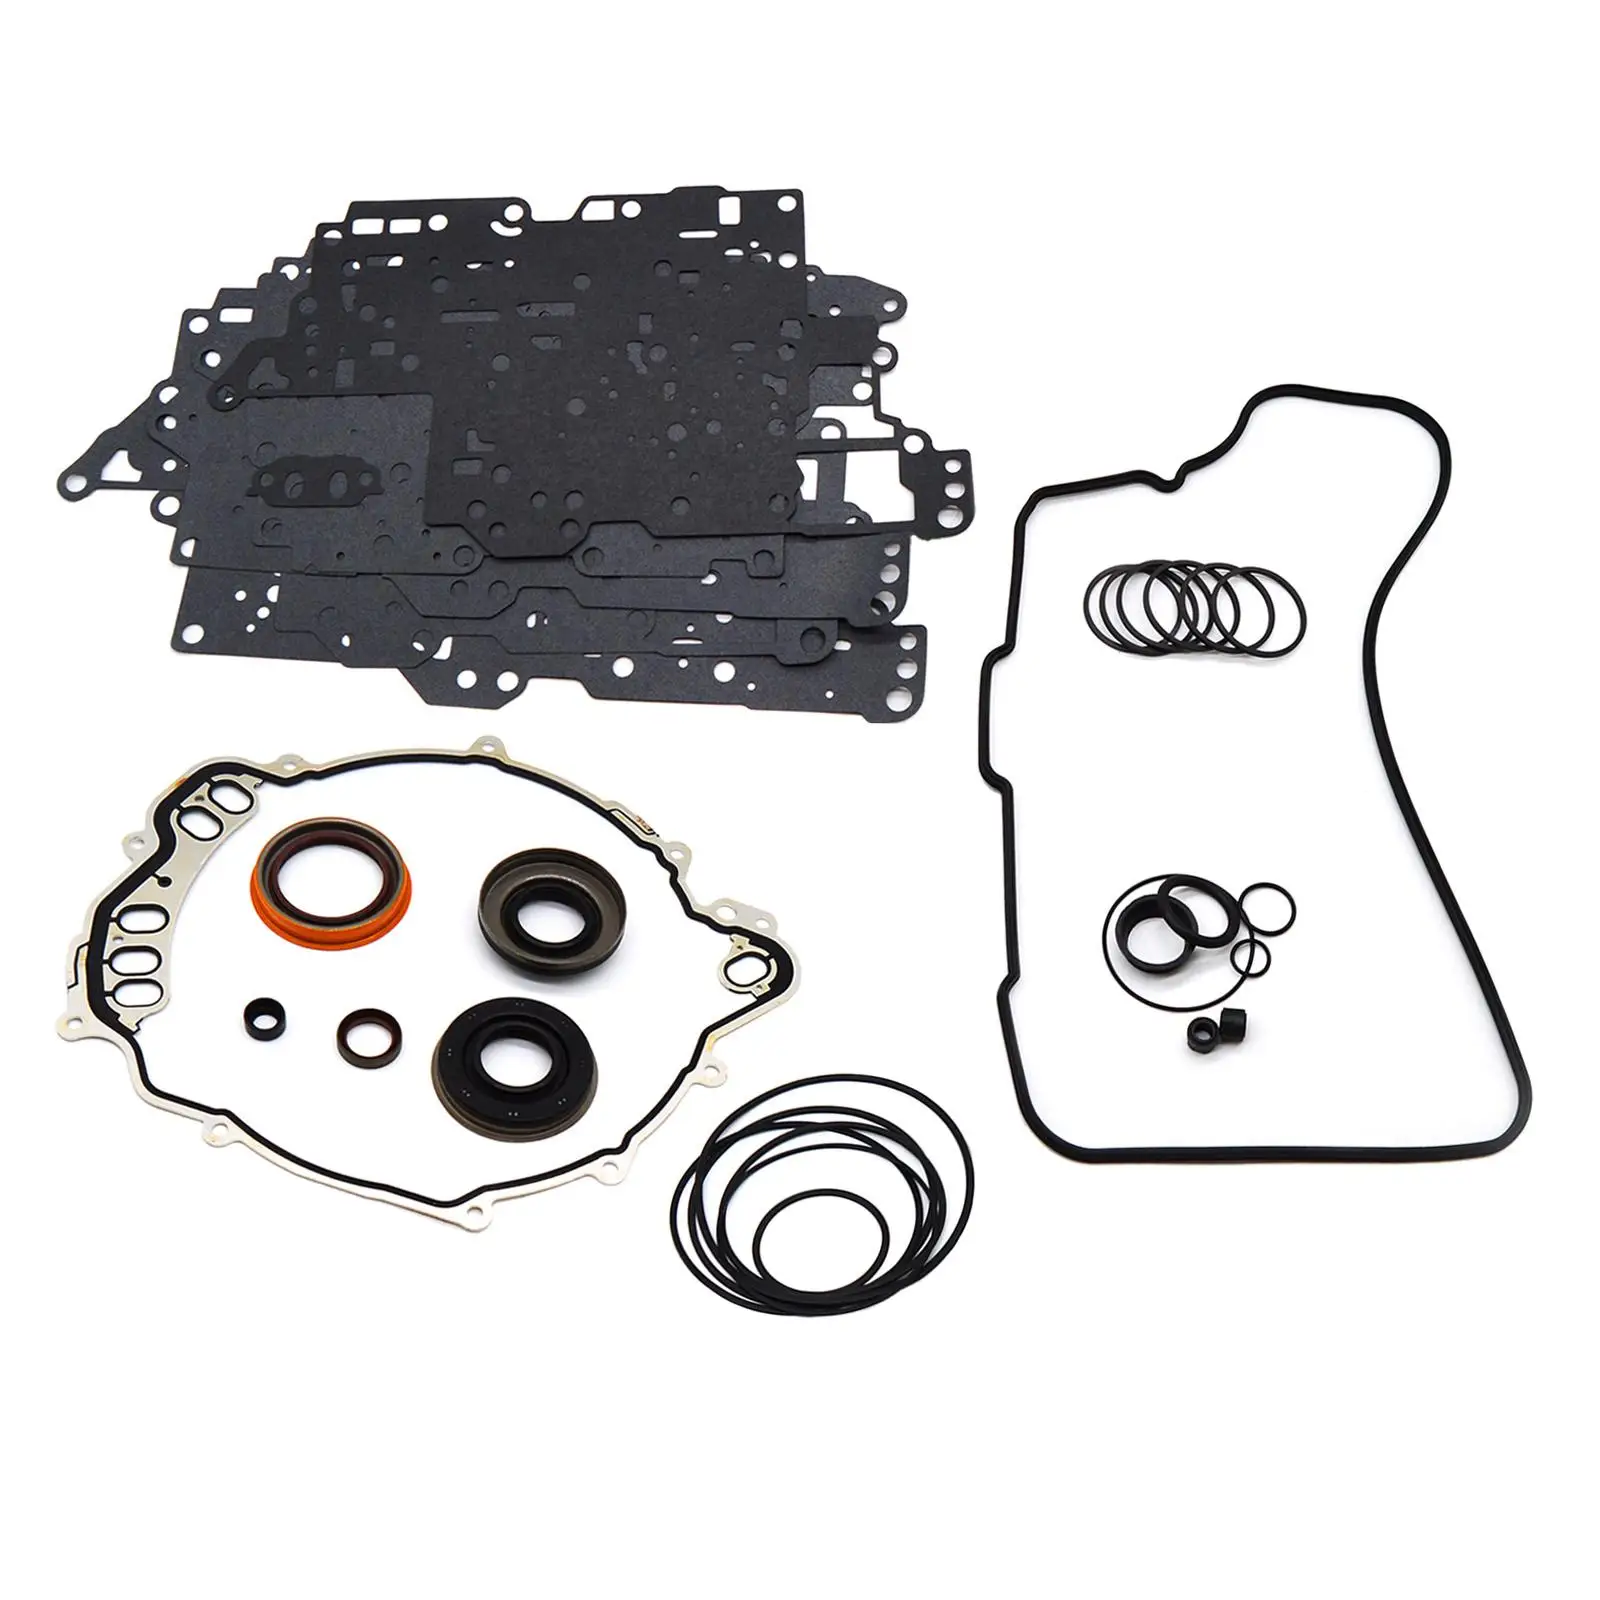 6T70 6T75 Auto Transmission Master Rebuild Kit Minor Repair Kit Fits for Chevrolet T19600A